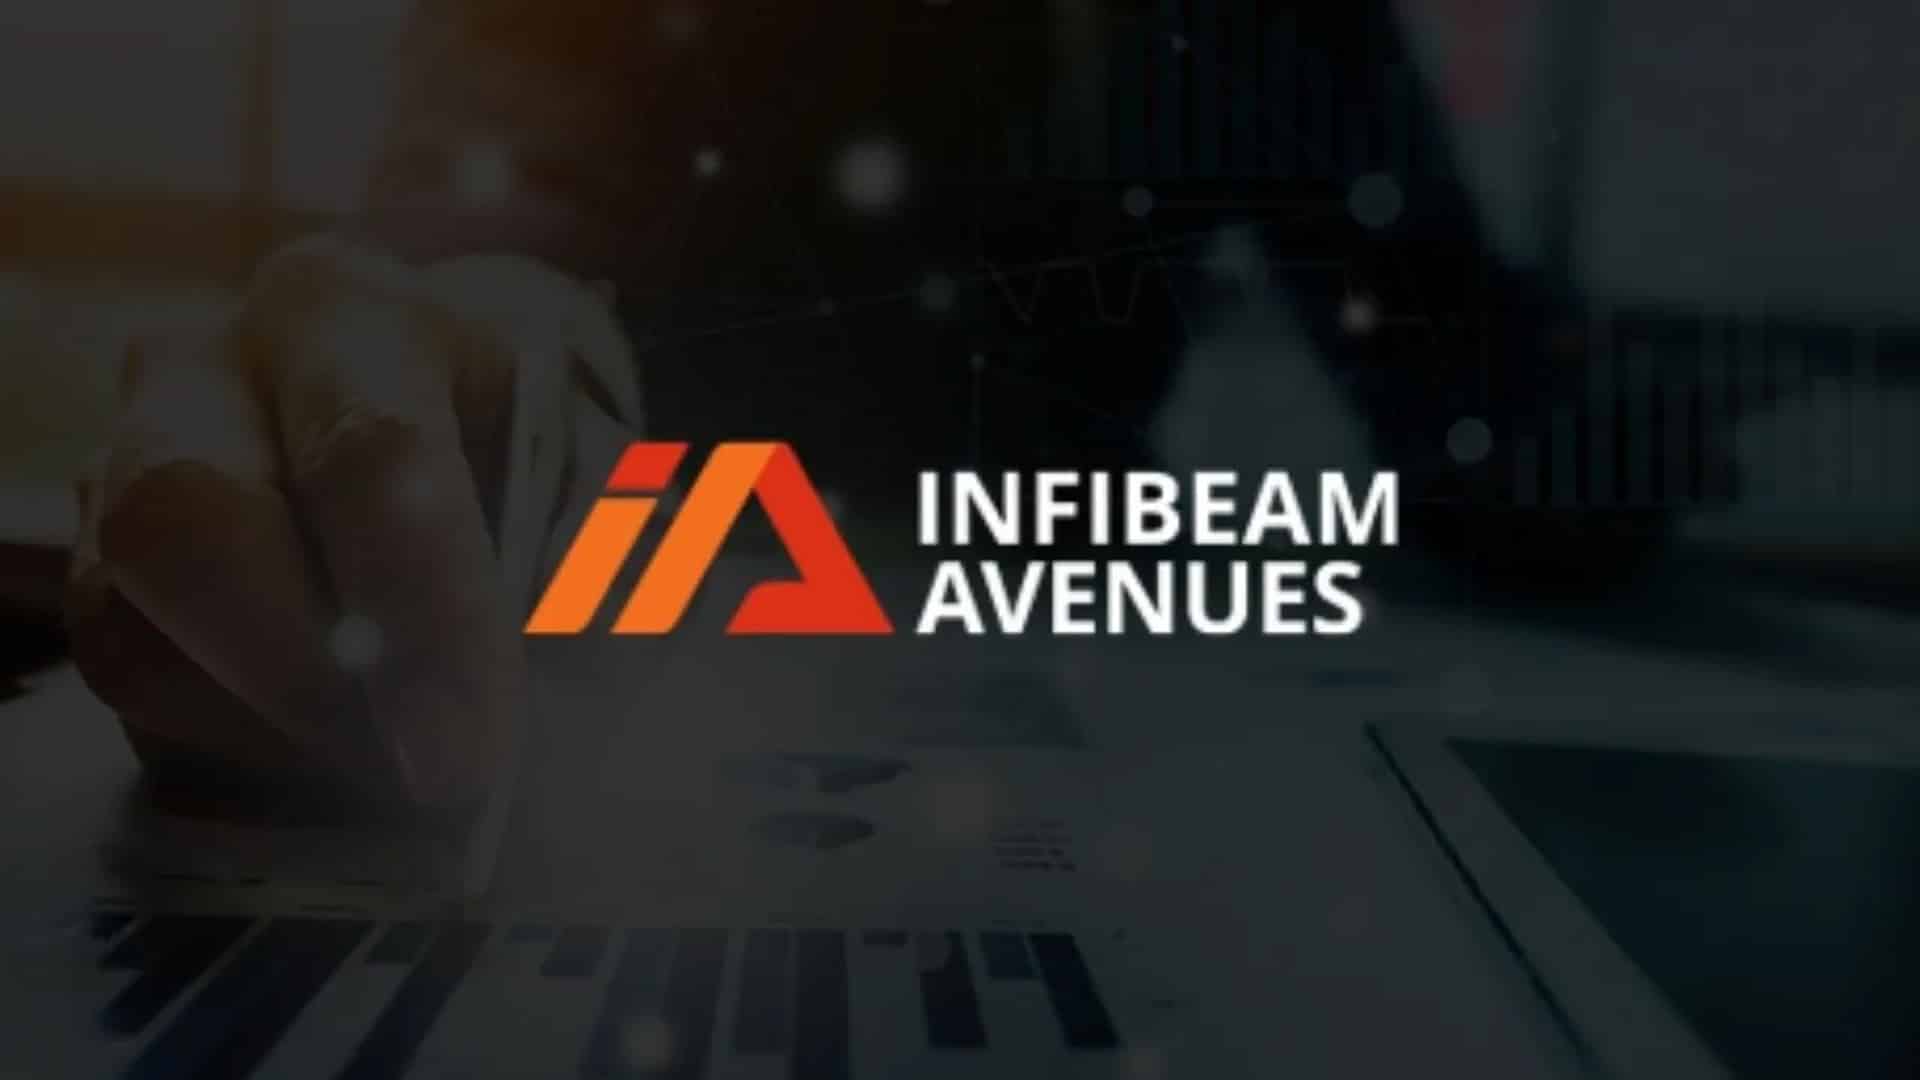 Infibeam Avenues to list digital marketing arm